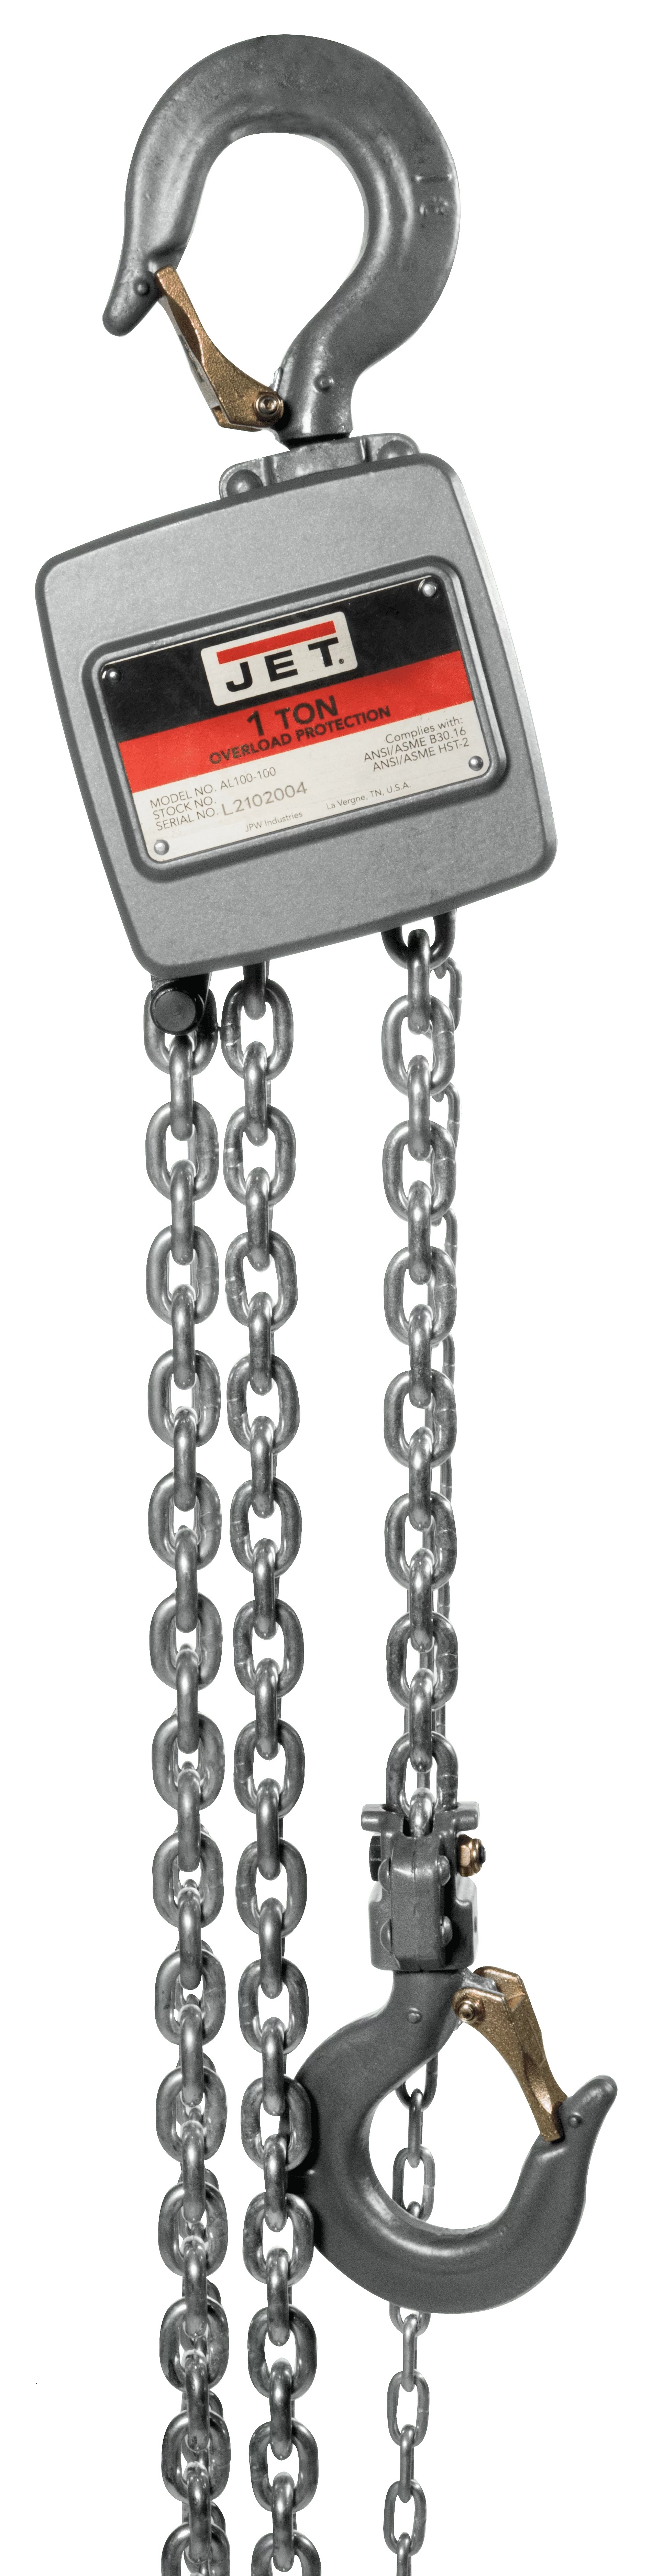 AL100-100-10 1 Ton Aluminum Hand Chain Hoist with 10ft of Lift